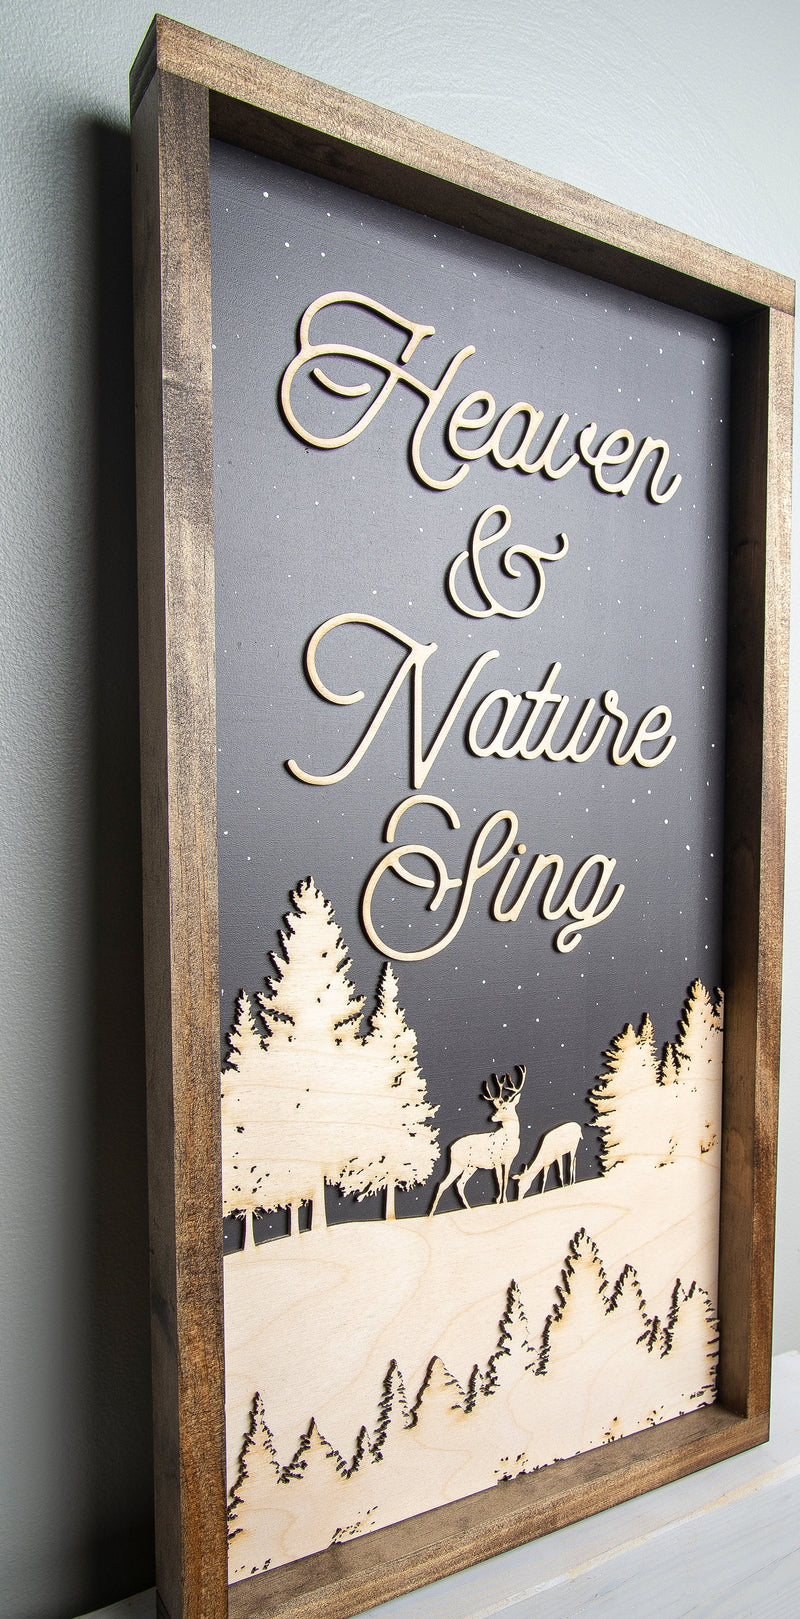 Heaven & Nature Sing - Wooden Laser Cut sign